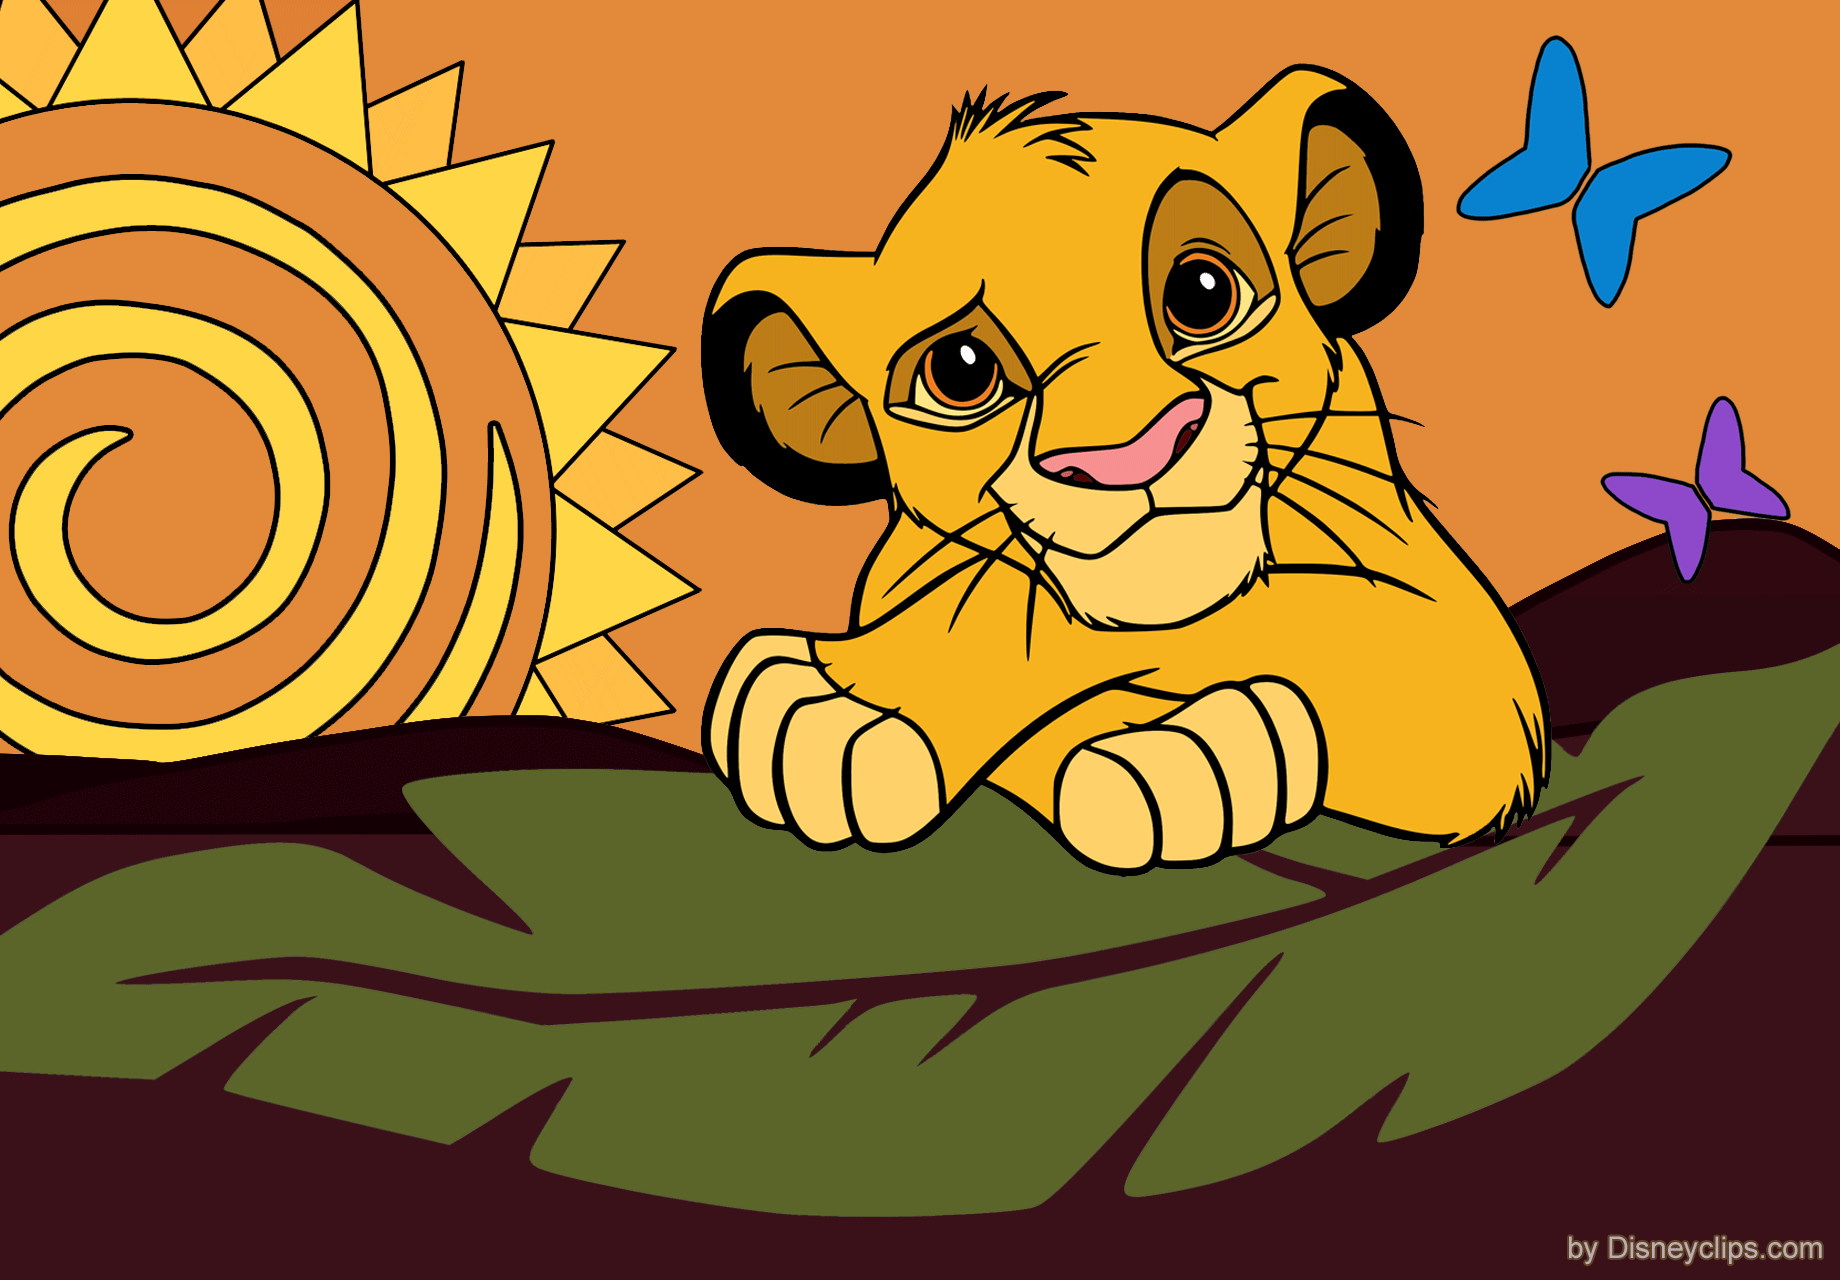 Simba And Nala The Lion King 2  Disney Couples Wallpapers and Images   Desktop Nexus Groups